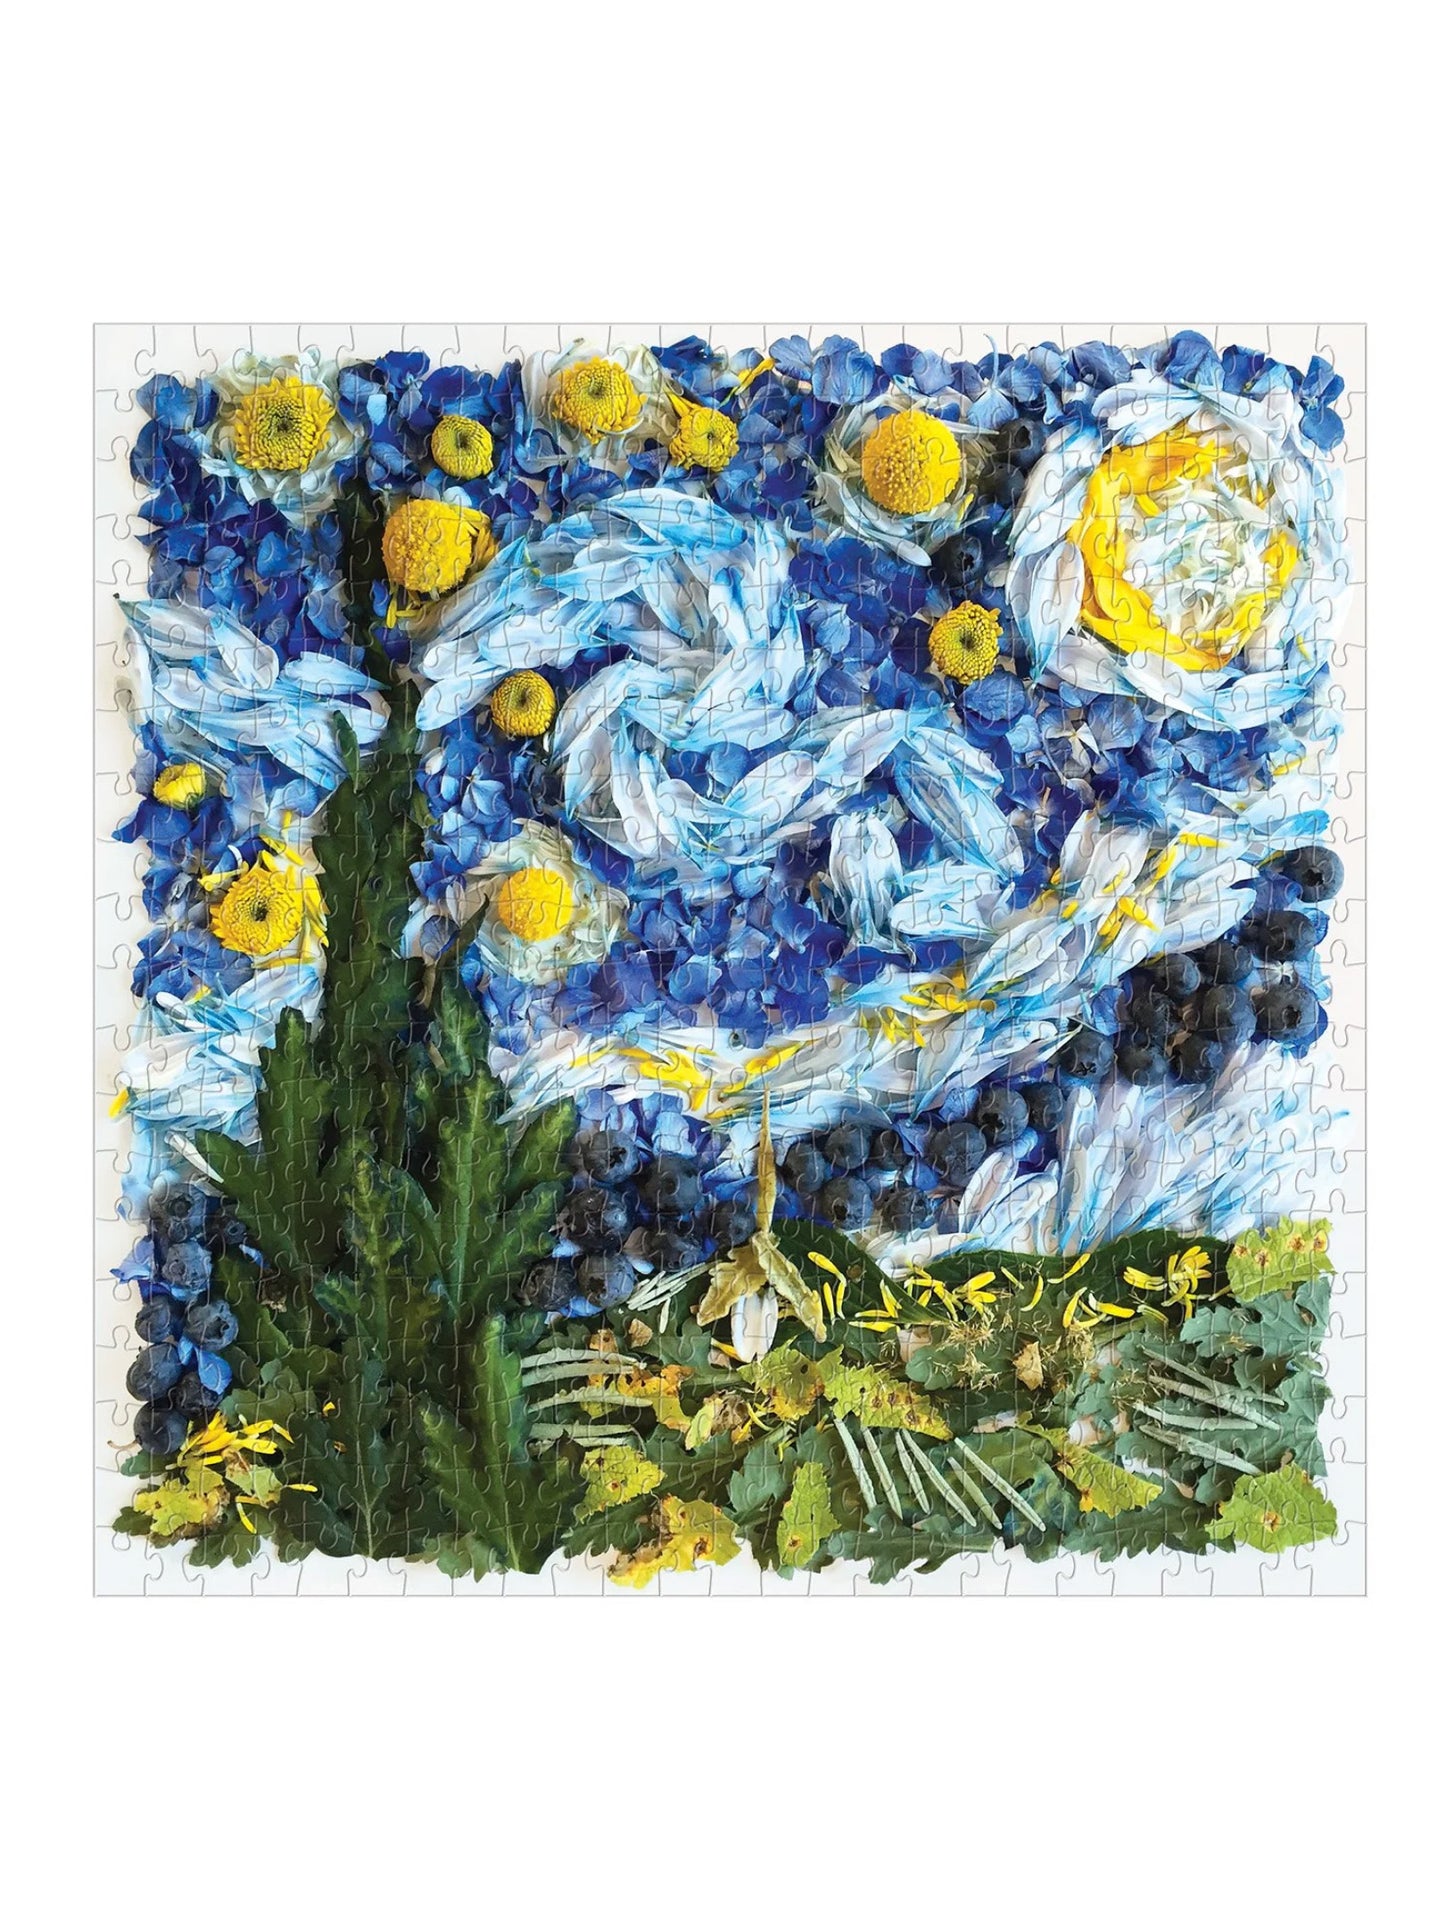 starry night petals 500 piece puzzle